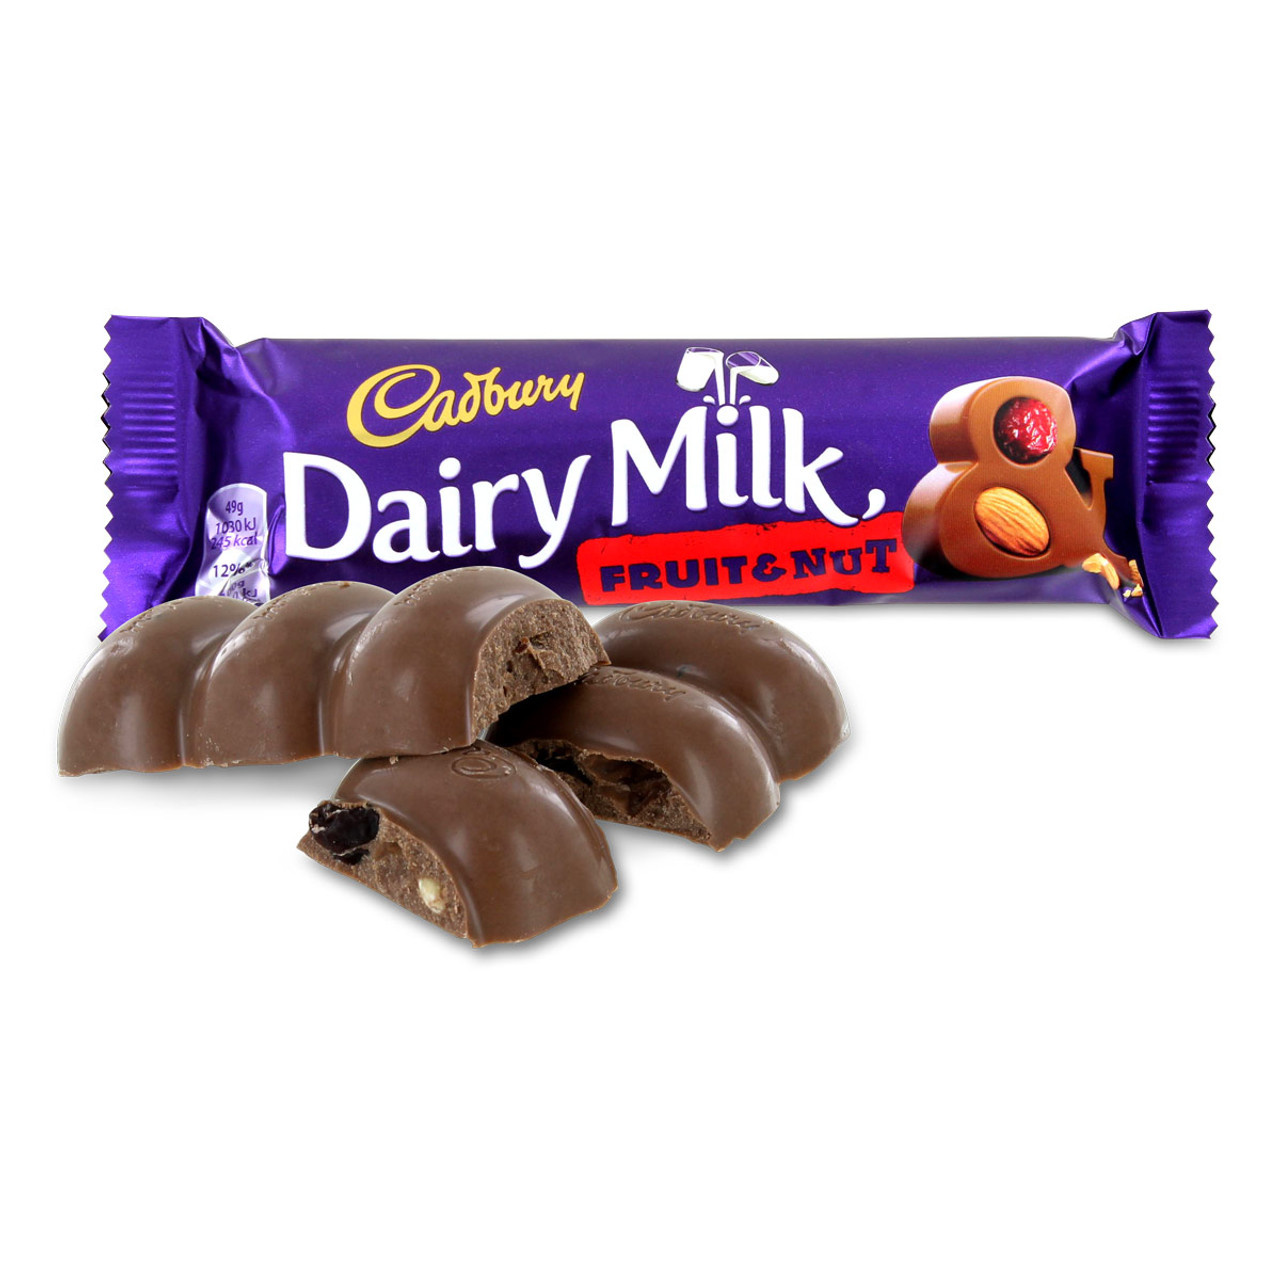 Cadbury Flake Chocolate Bar Each (49g) - Compare Prices & Where To Buy 